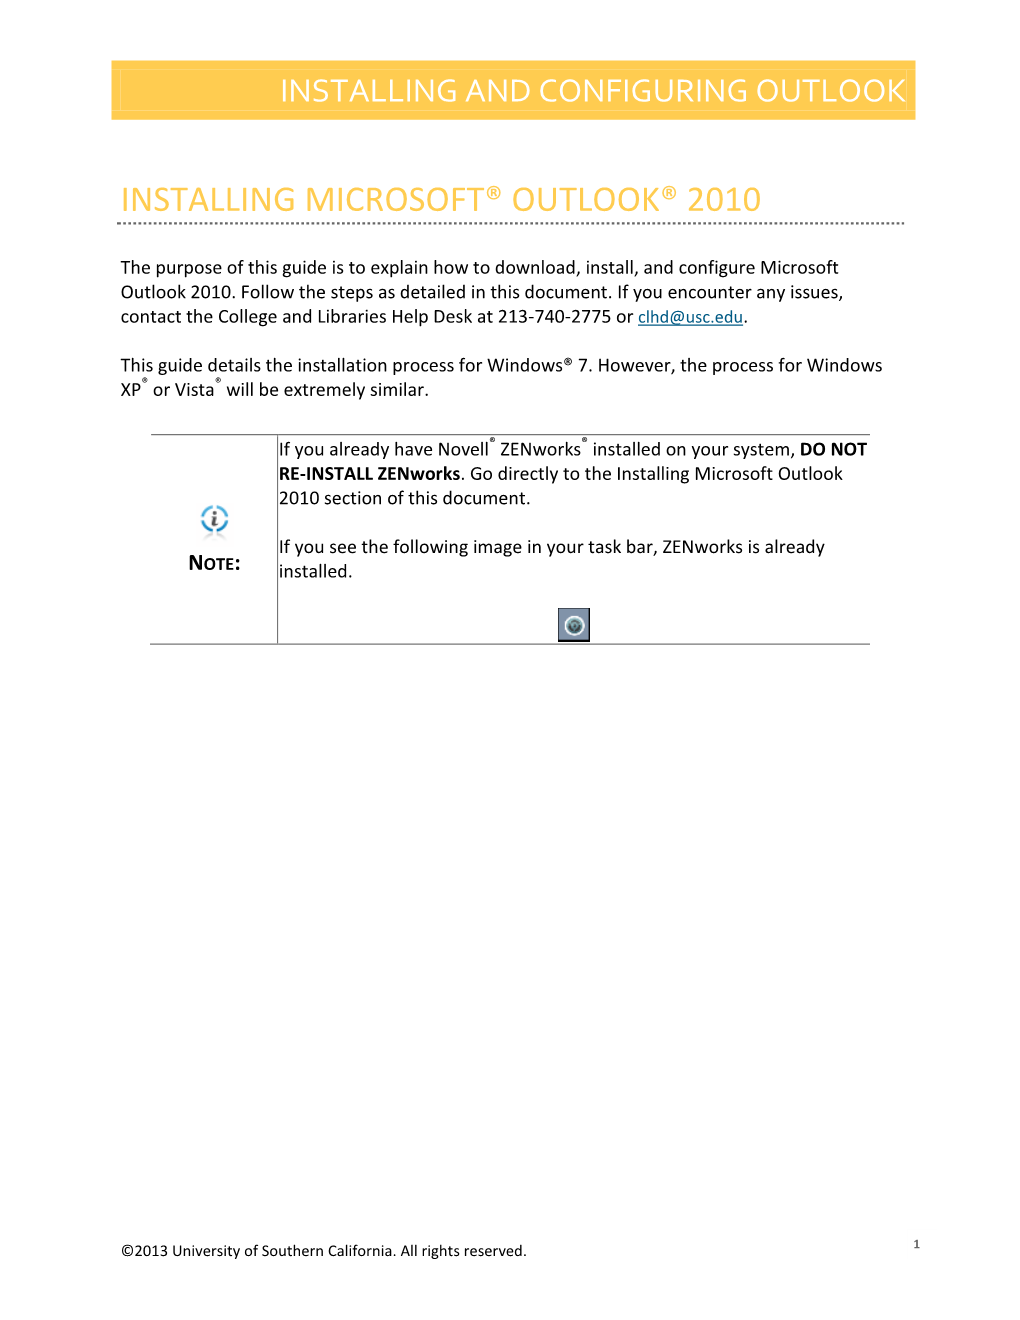 Installing Microsoft® Outlook® 2010